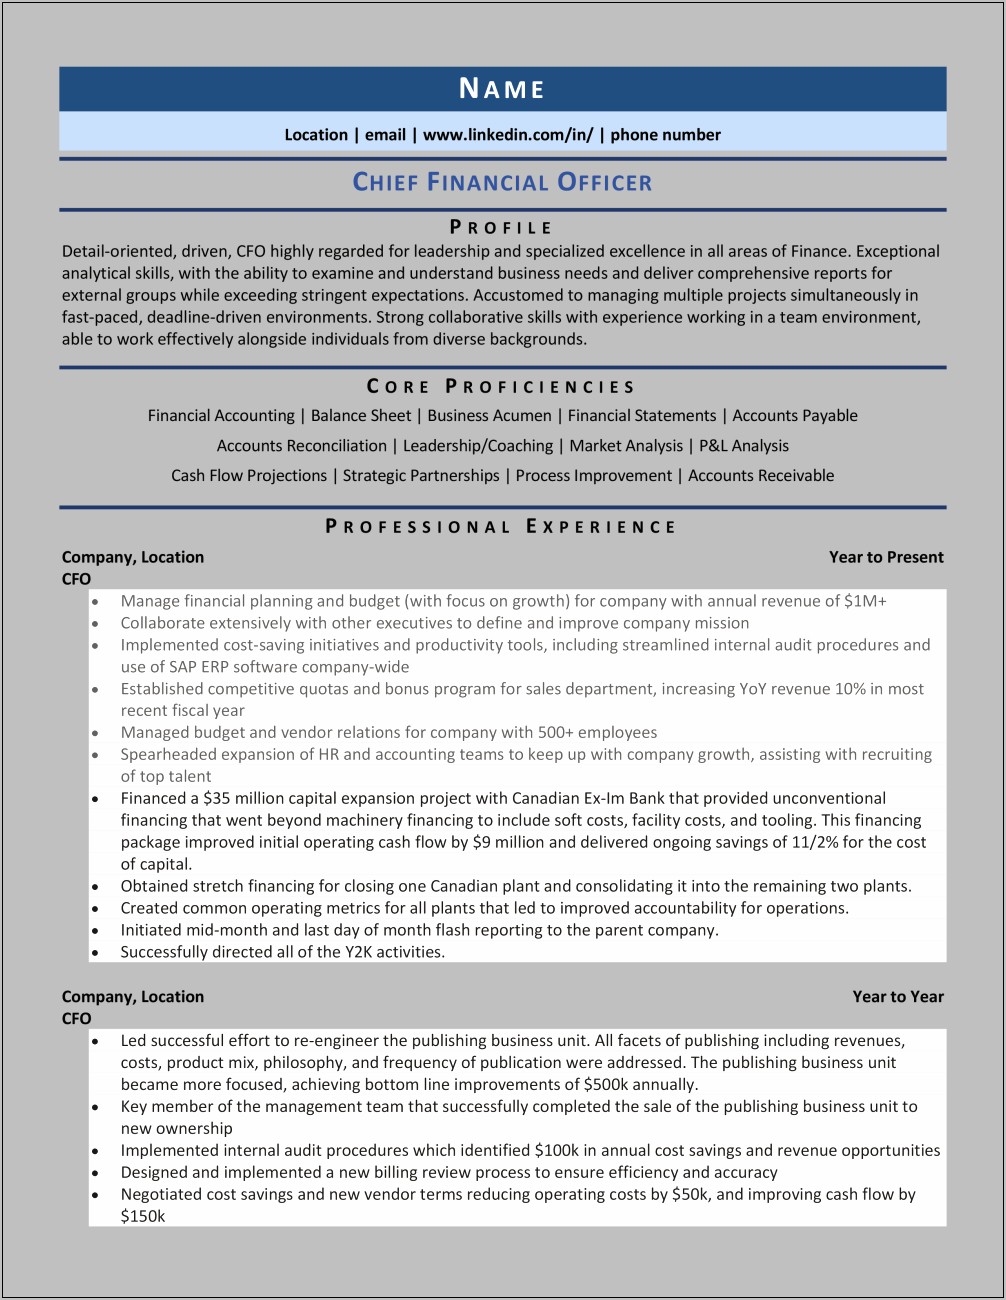 Chief Financial Officer Job Description For Resume